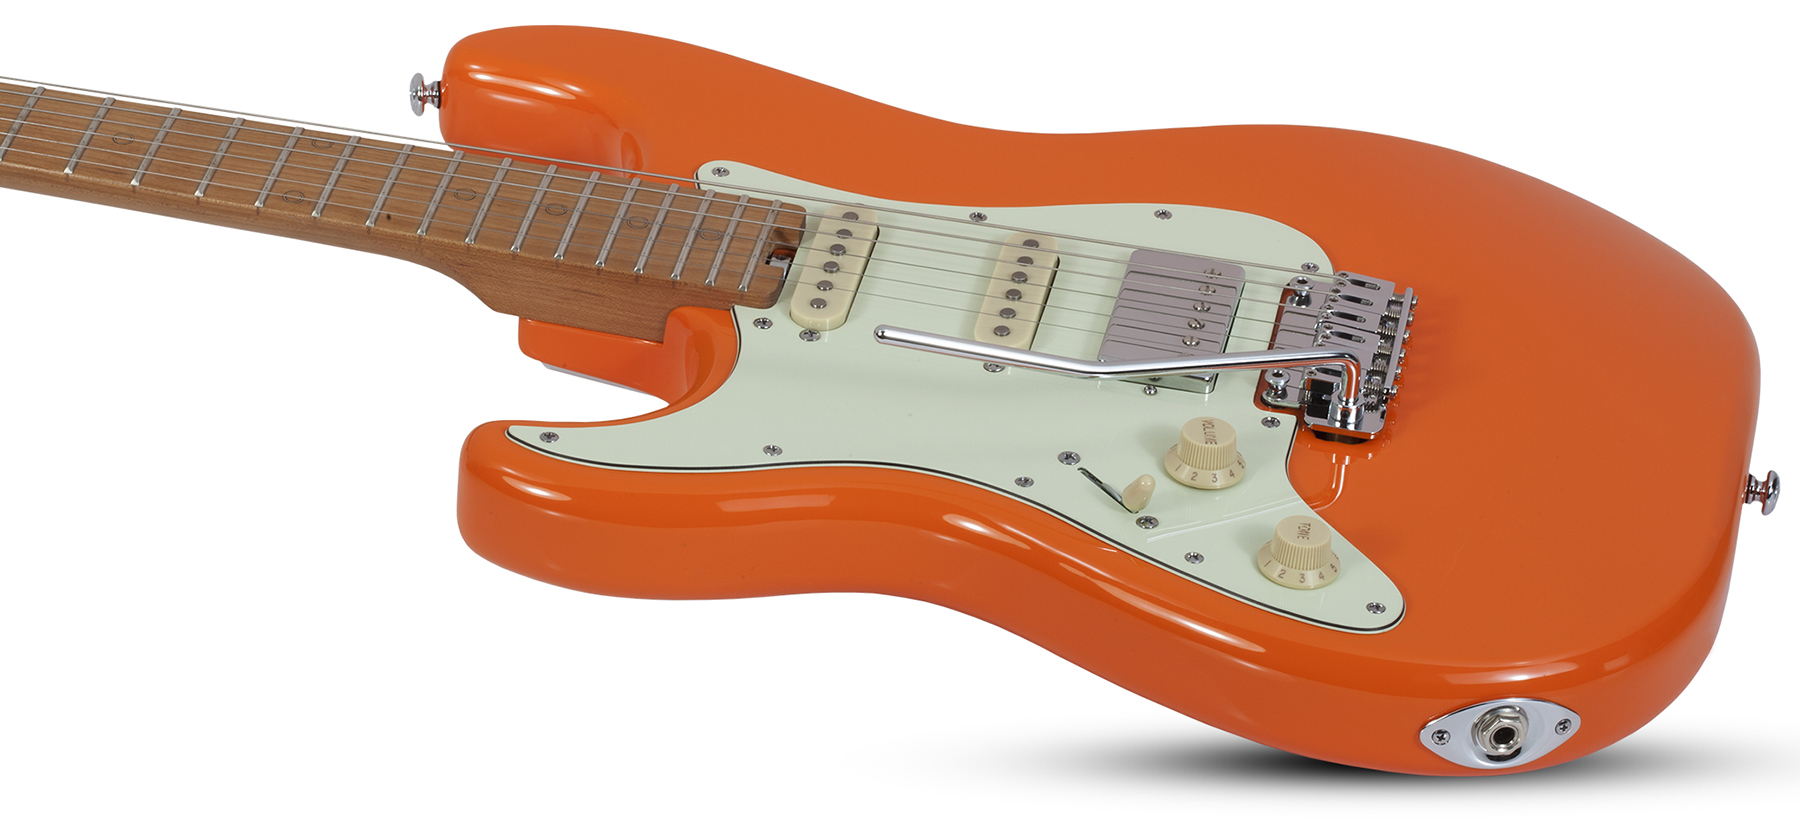 Schecter Nick Johnston Traditional Lh Gaucher Hss Trem Mn - Atomic Orange - Left-handed electric guitar - Variation 1